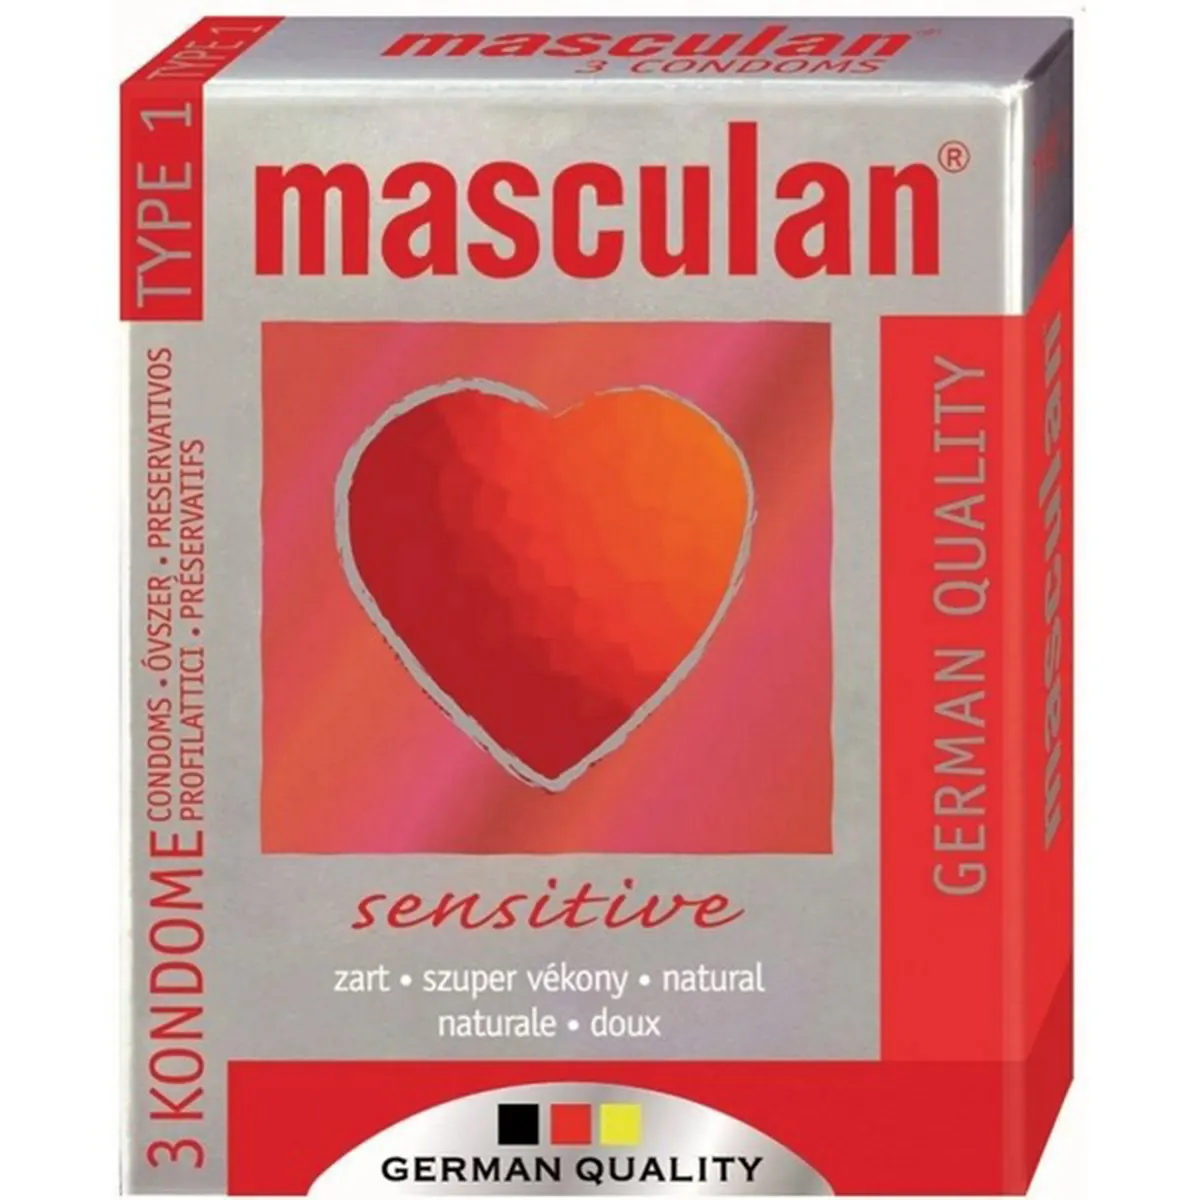 Masculan sensitive kondomi